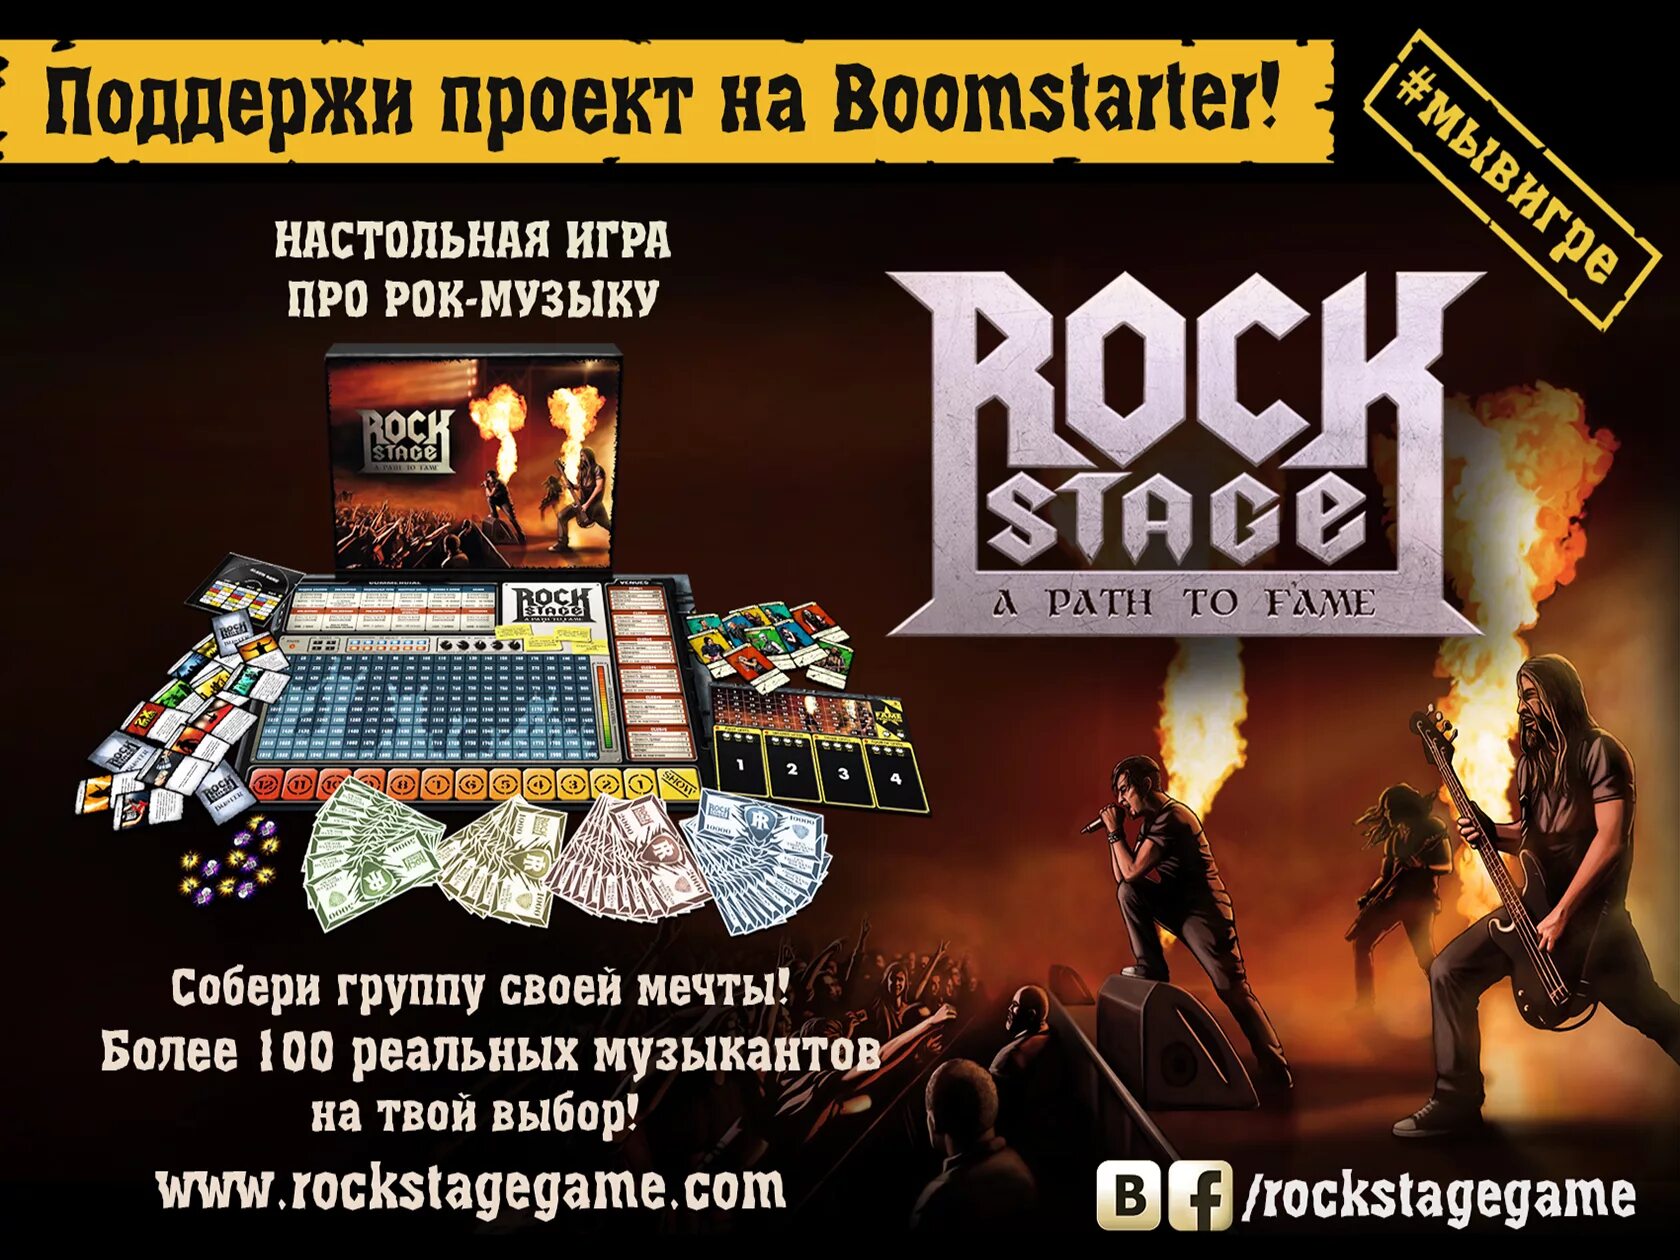 Rock Stage: а Path to Fame. Rock Stage игра. Настольная игра Rock Stage: а Path to Fame. Настольная игра для музыкантов.